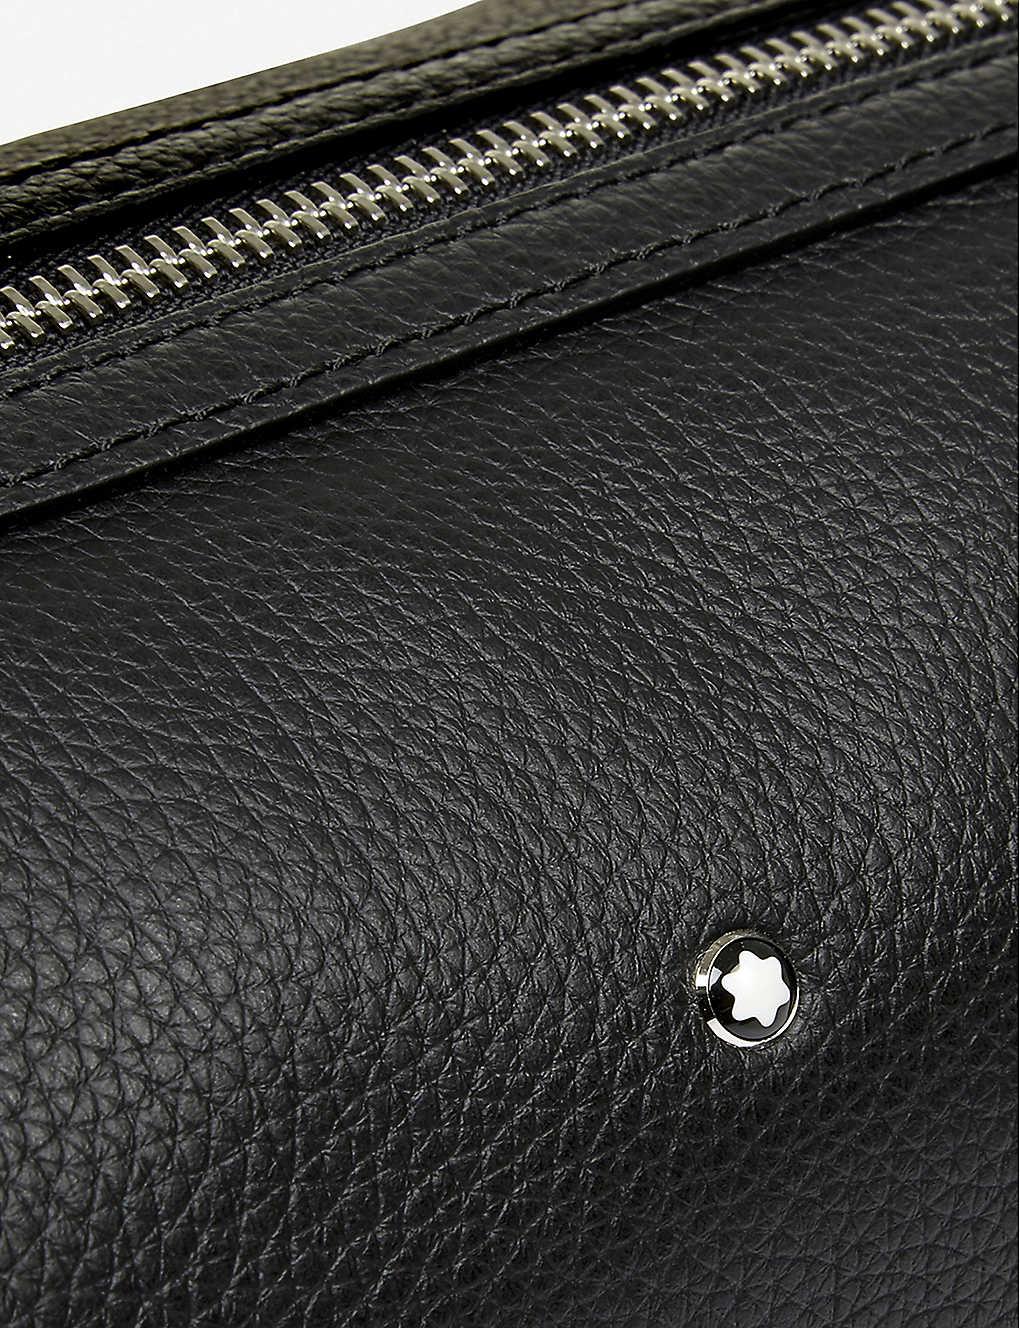 Montblanc Meisterstück Soft Grain Leather Small Envelope Bag